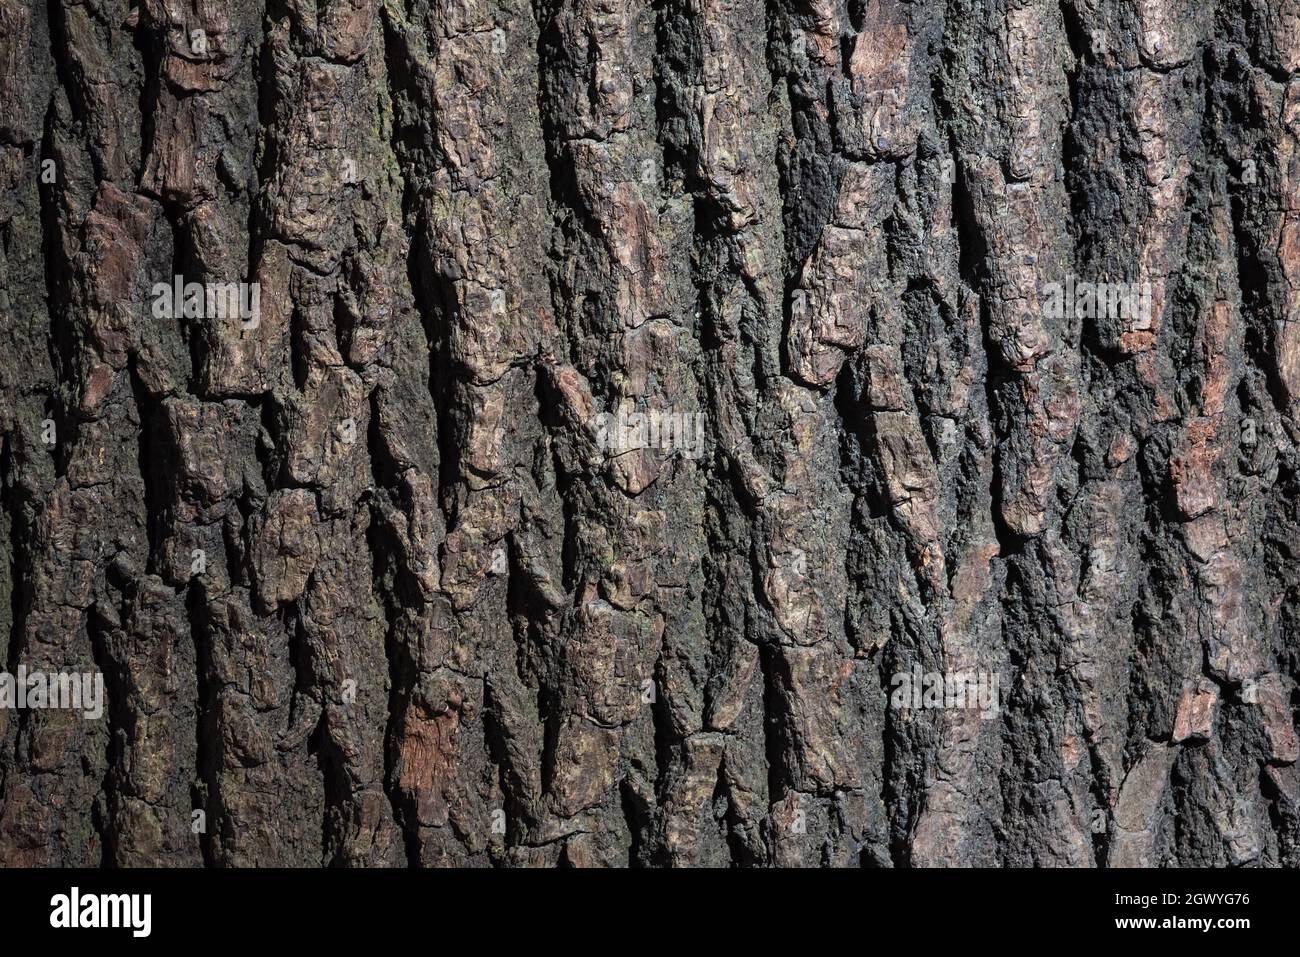 Cinnamomum camphora Presl - camphor tree - tree trunk close-up view for background texture Stock Photo